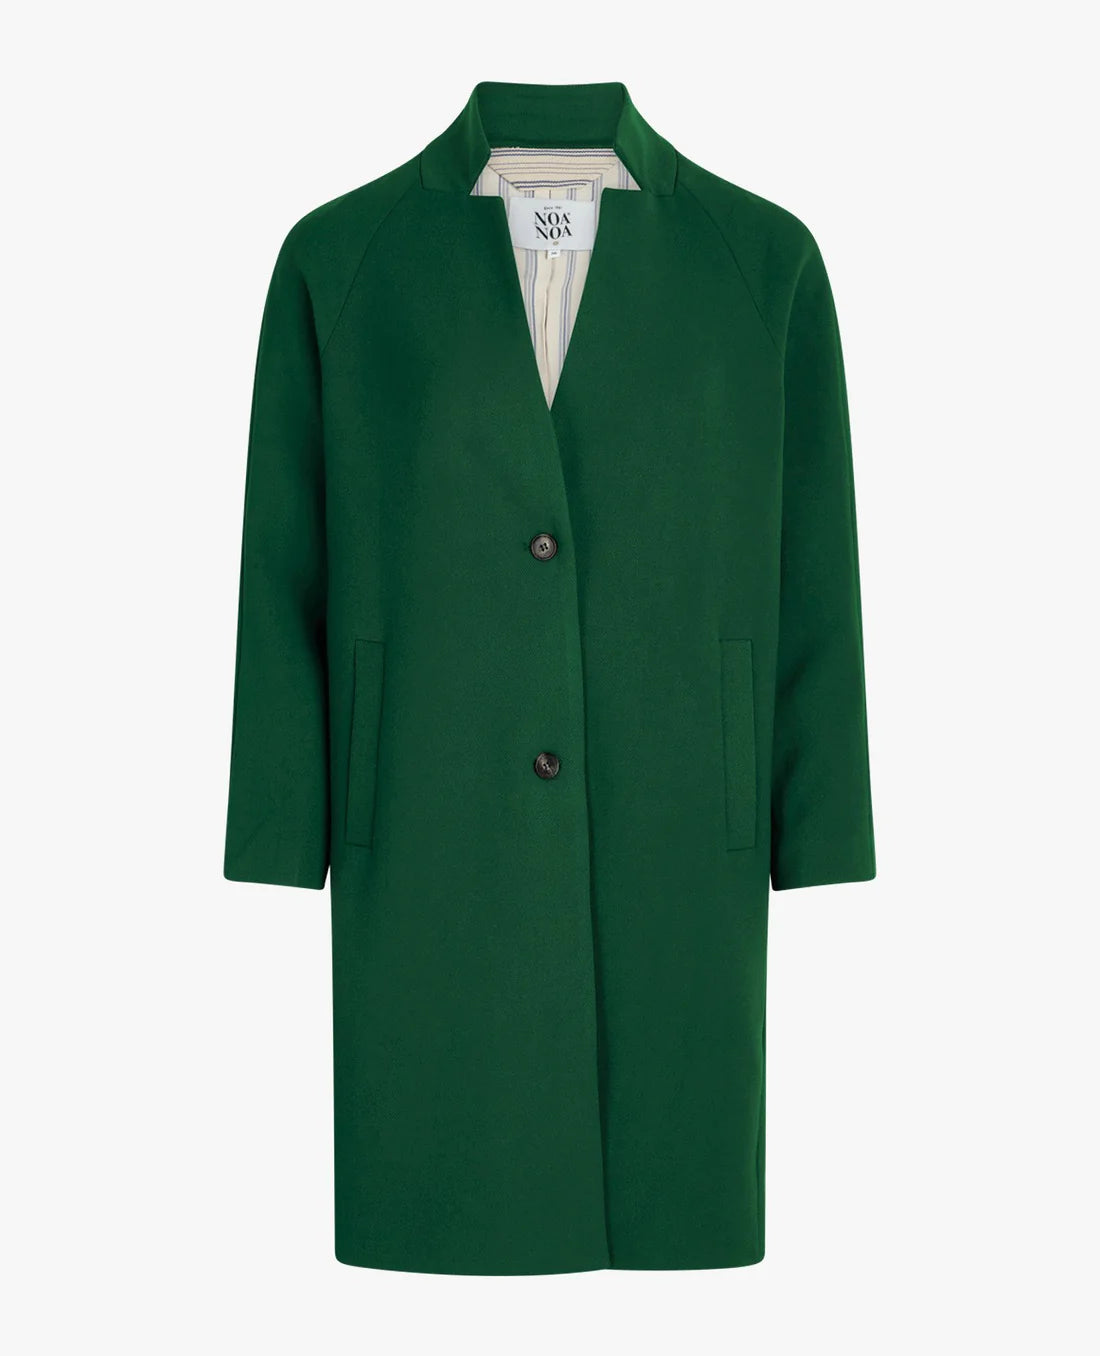 Cath Coat in Evergreen